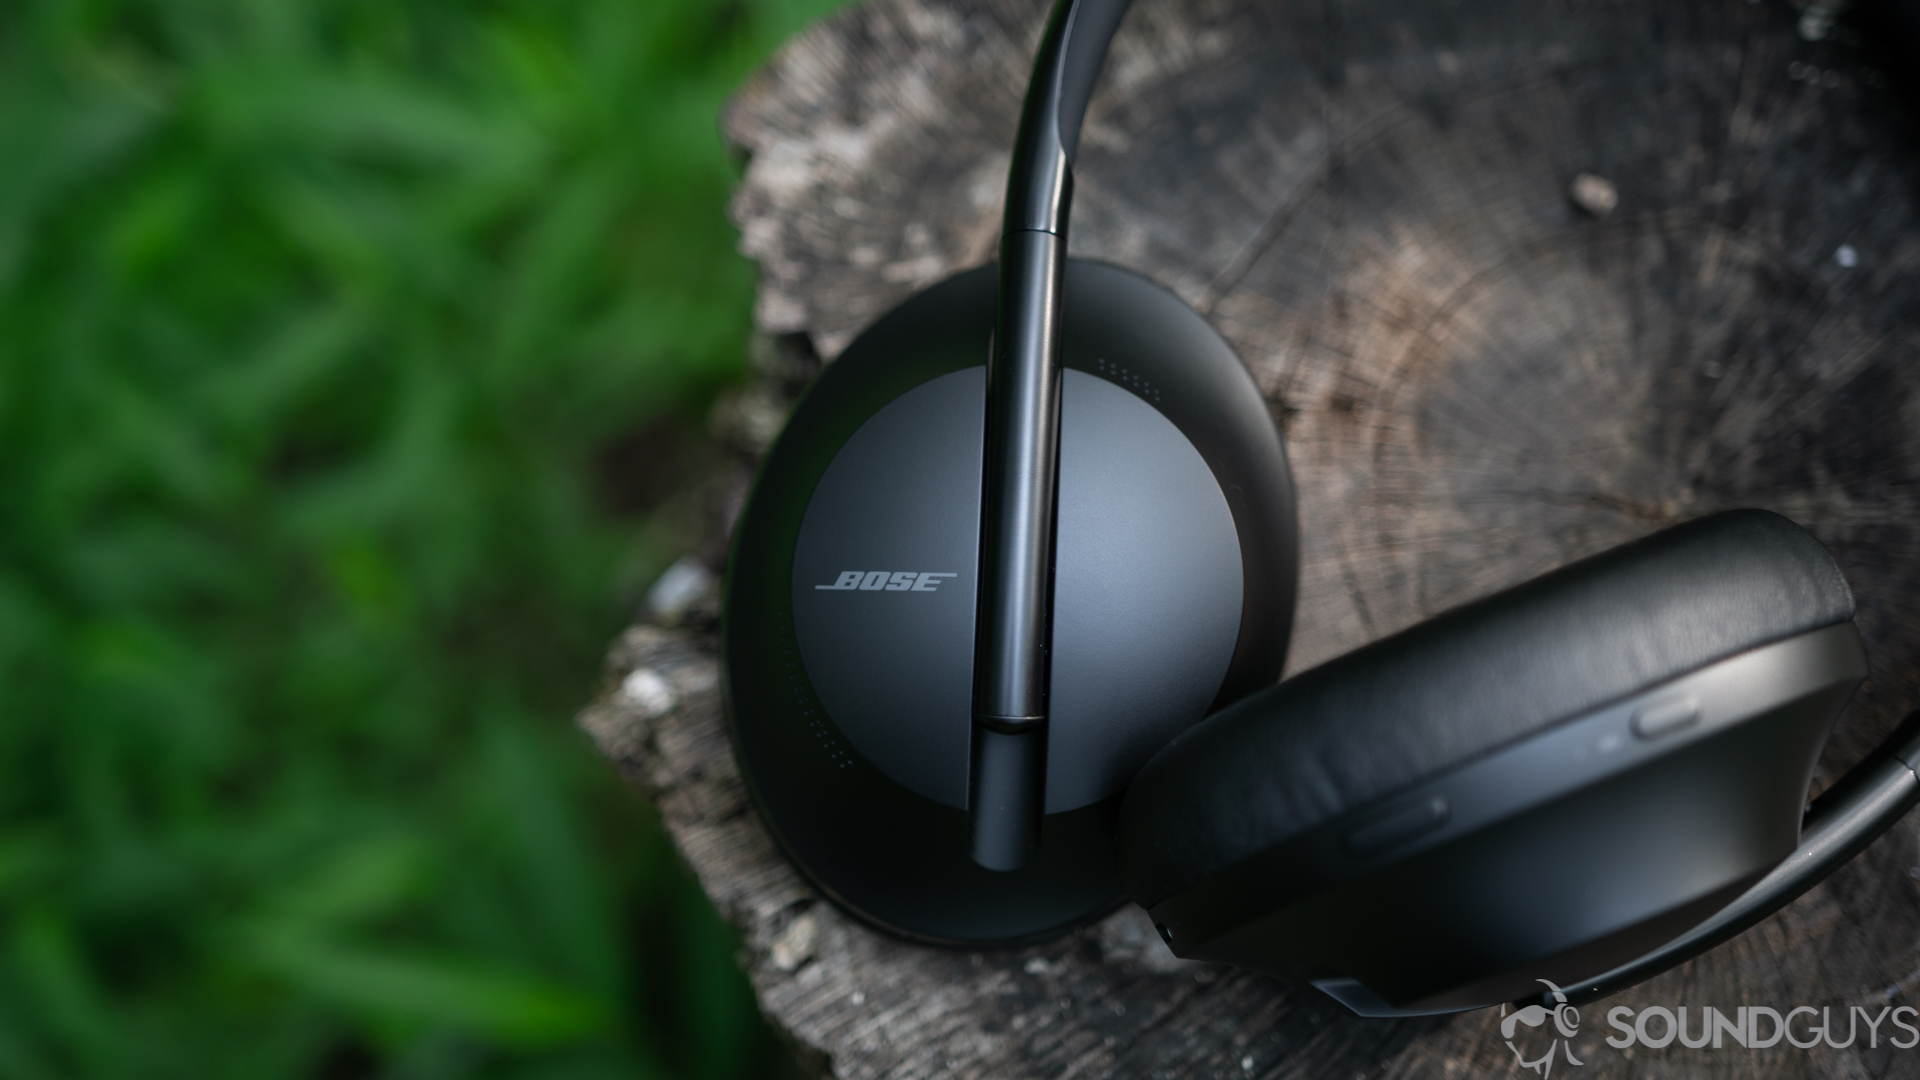 Bose Noise Cancelling Headphones Re Soundguys